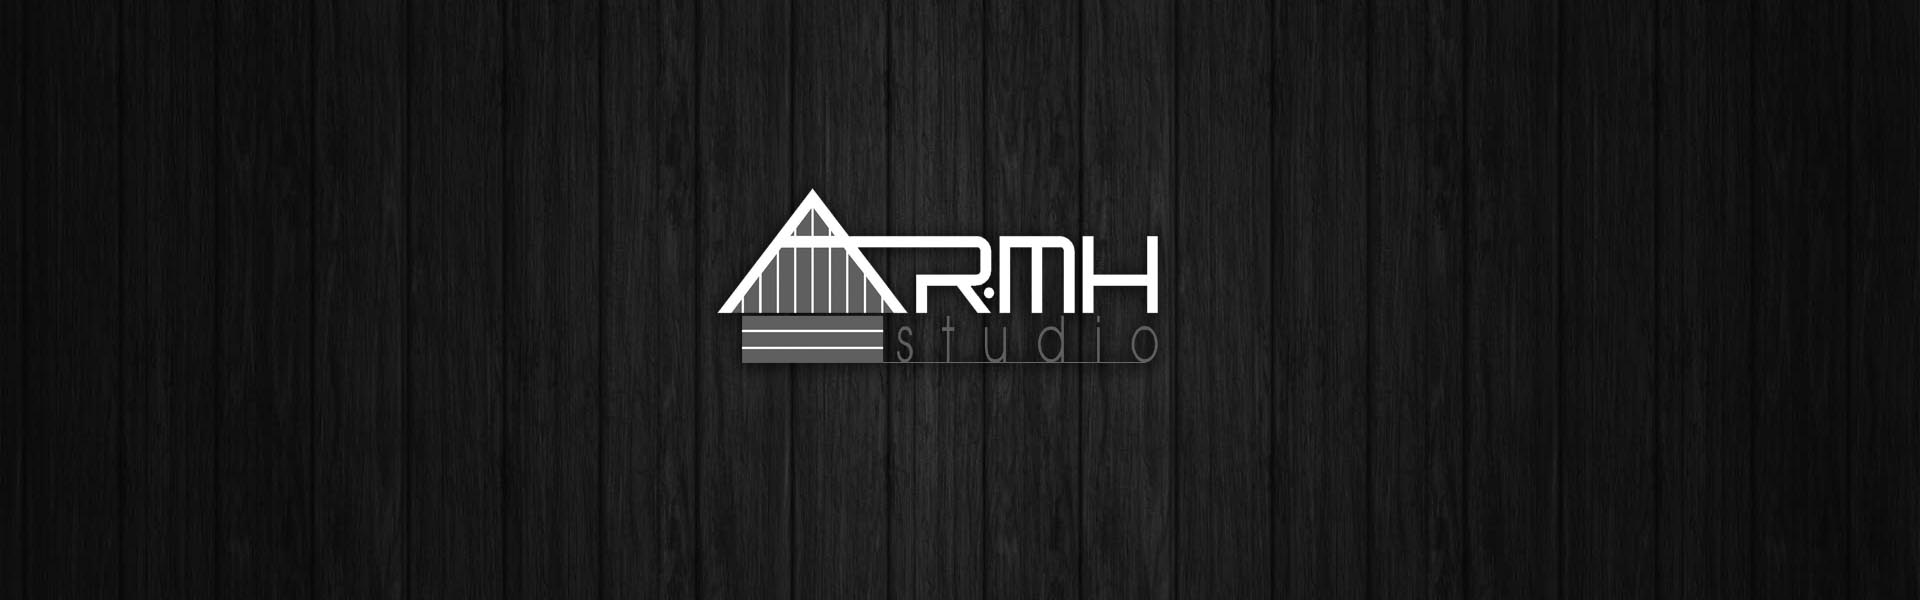 AR.MH studio